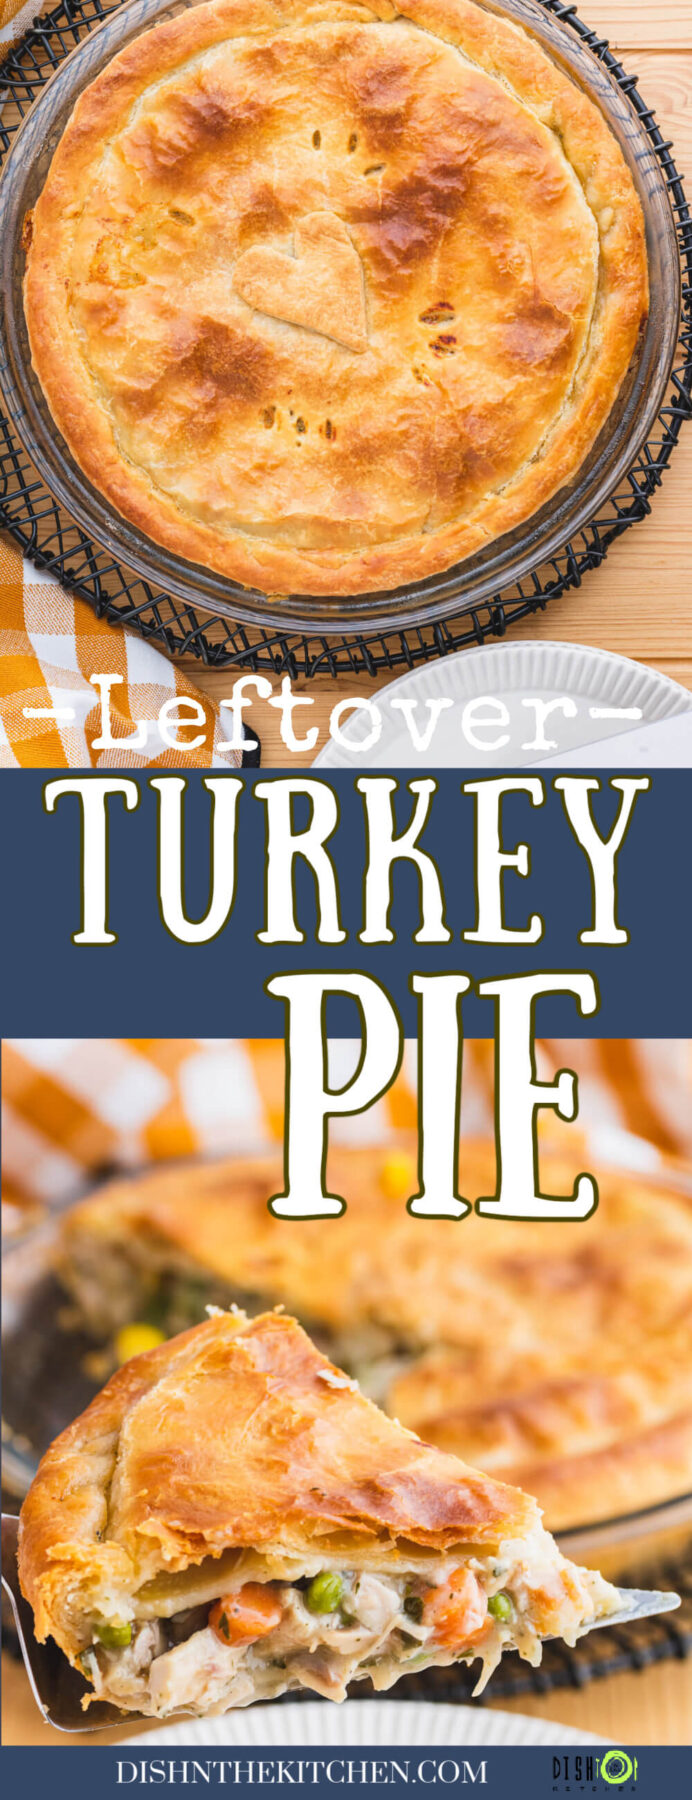 Pinterest image of a golden baked turkey pot pie and a slice of turkey pie.